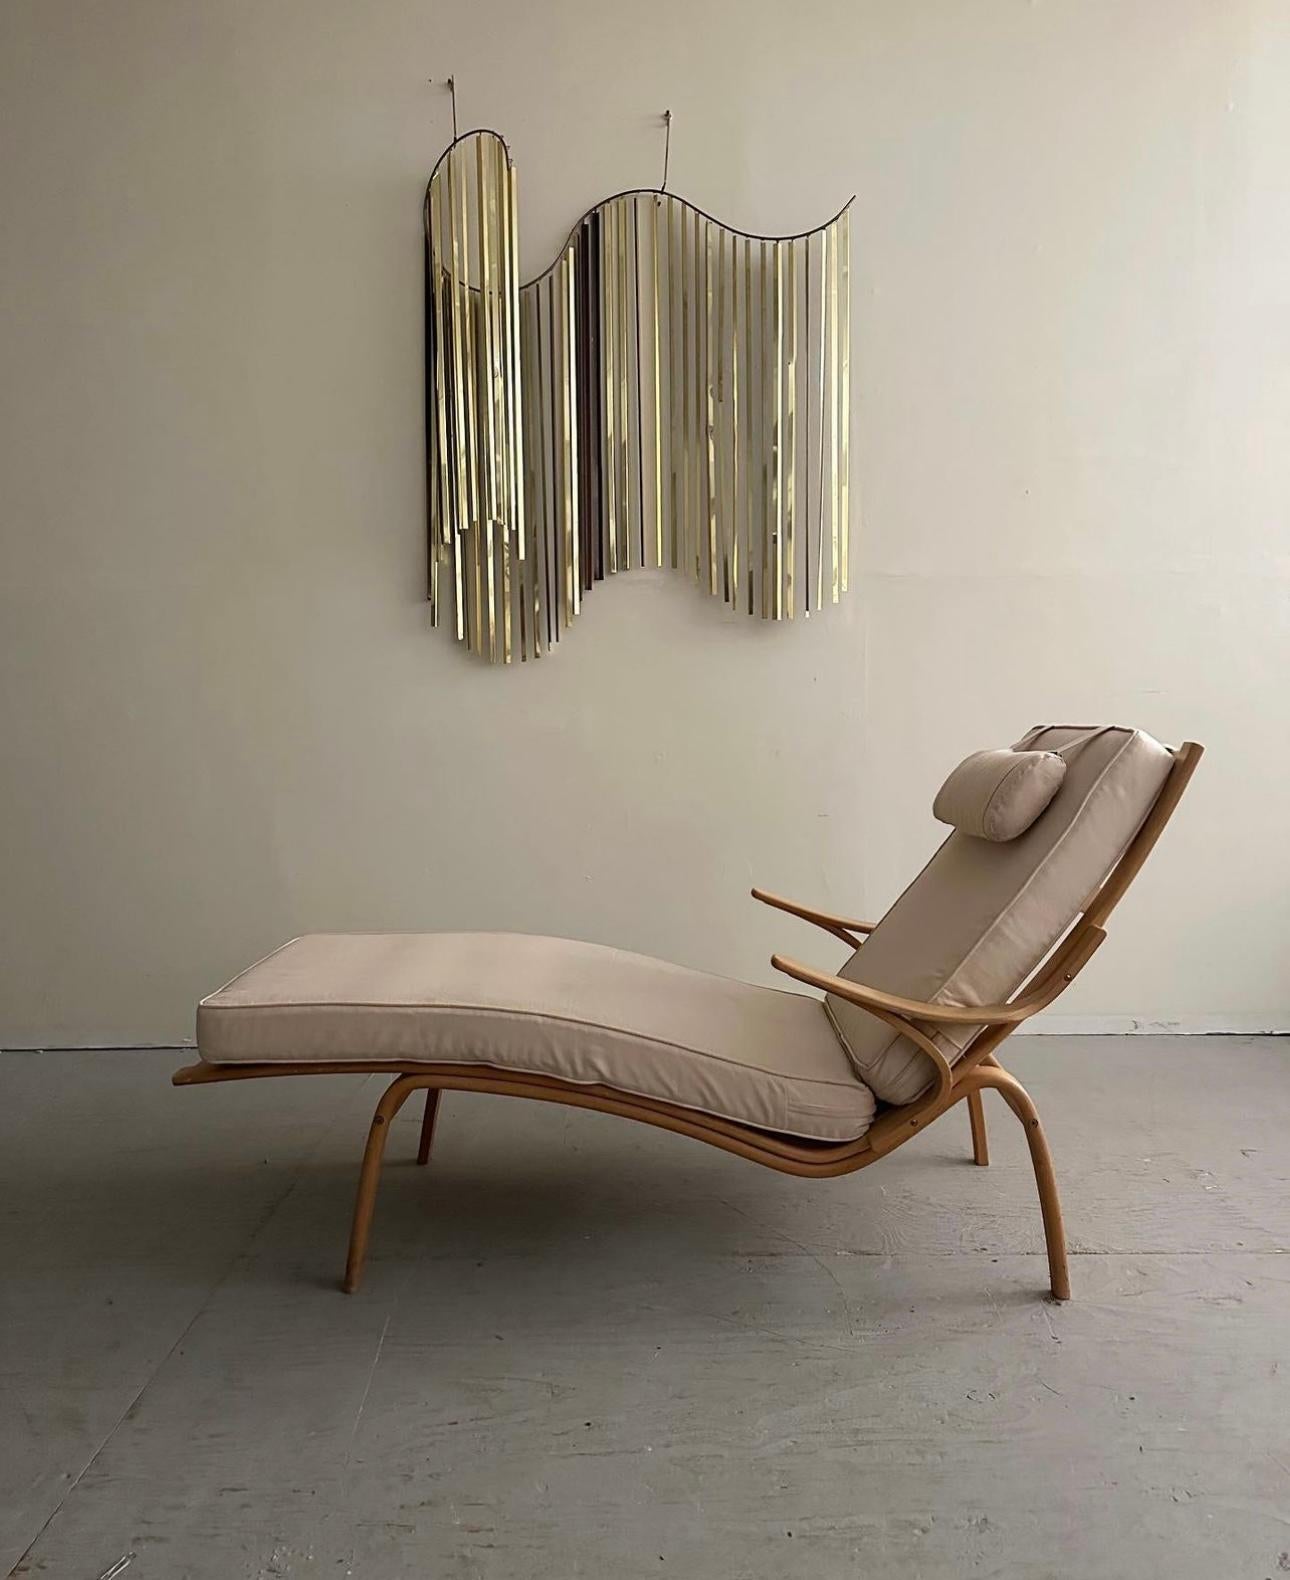 Wood Mid-Century Modern Bentwood Chaise Lounge Designed by Alvar Aalto for Artek